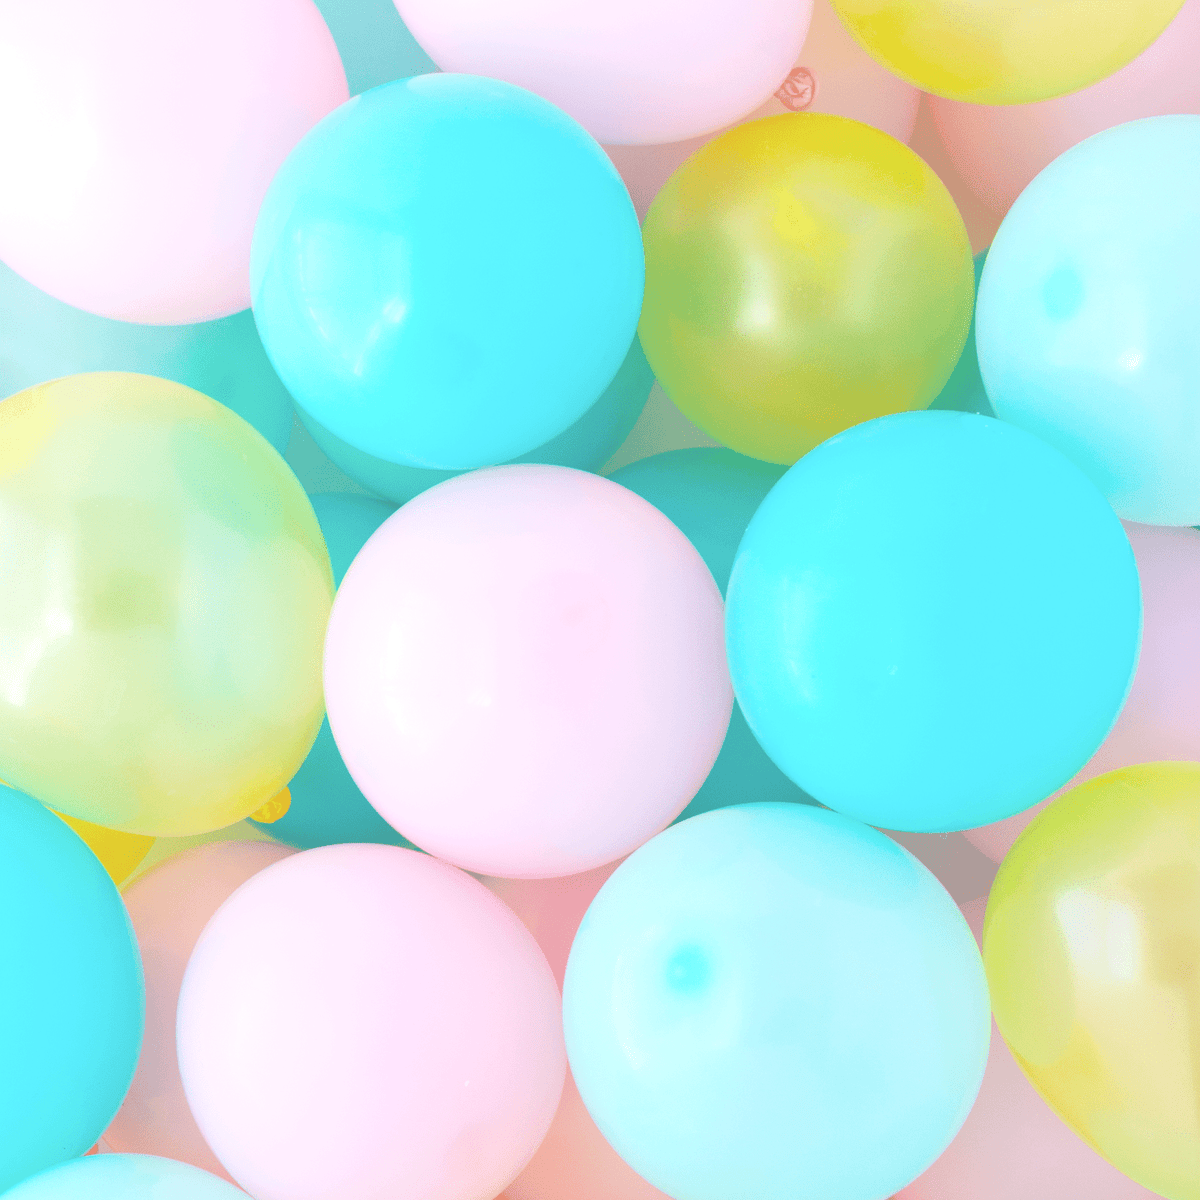 Pastel Rainbow Mini Balloons Mix – A Little Whimsy